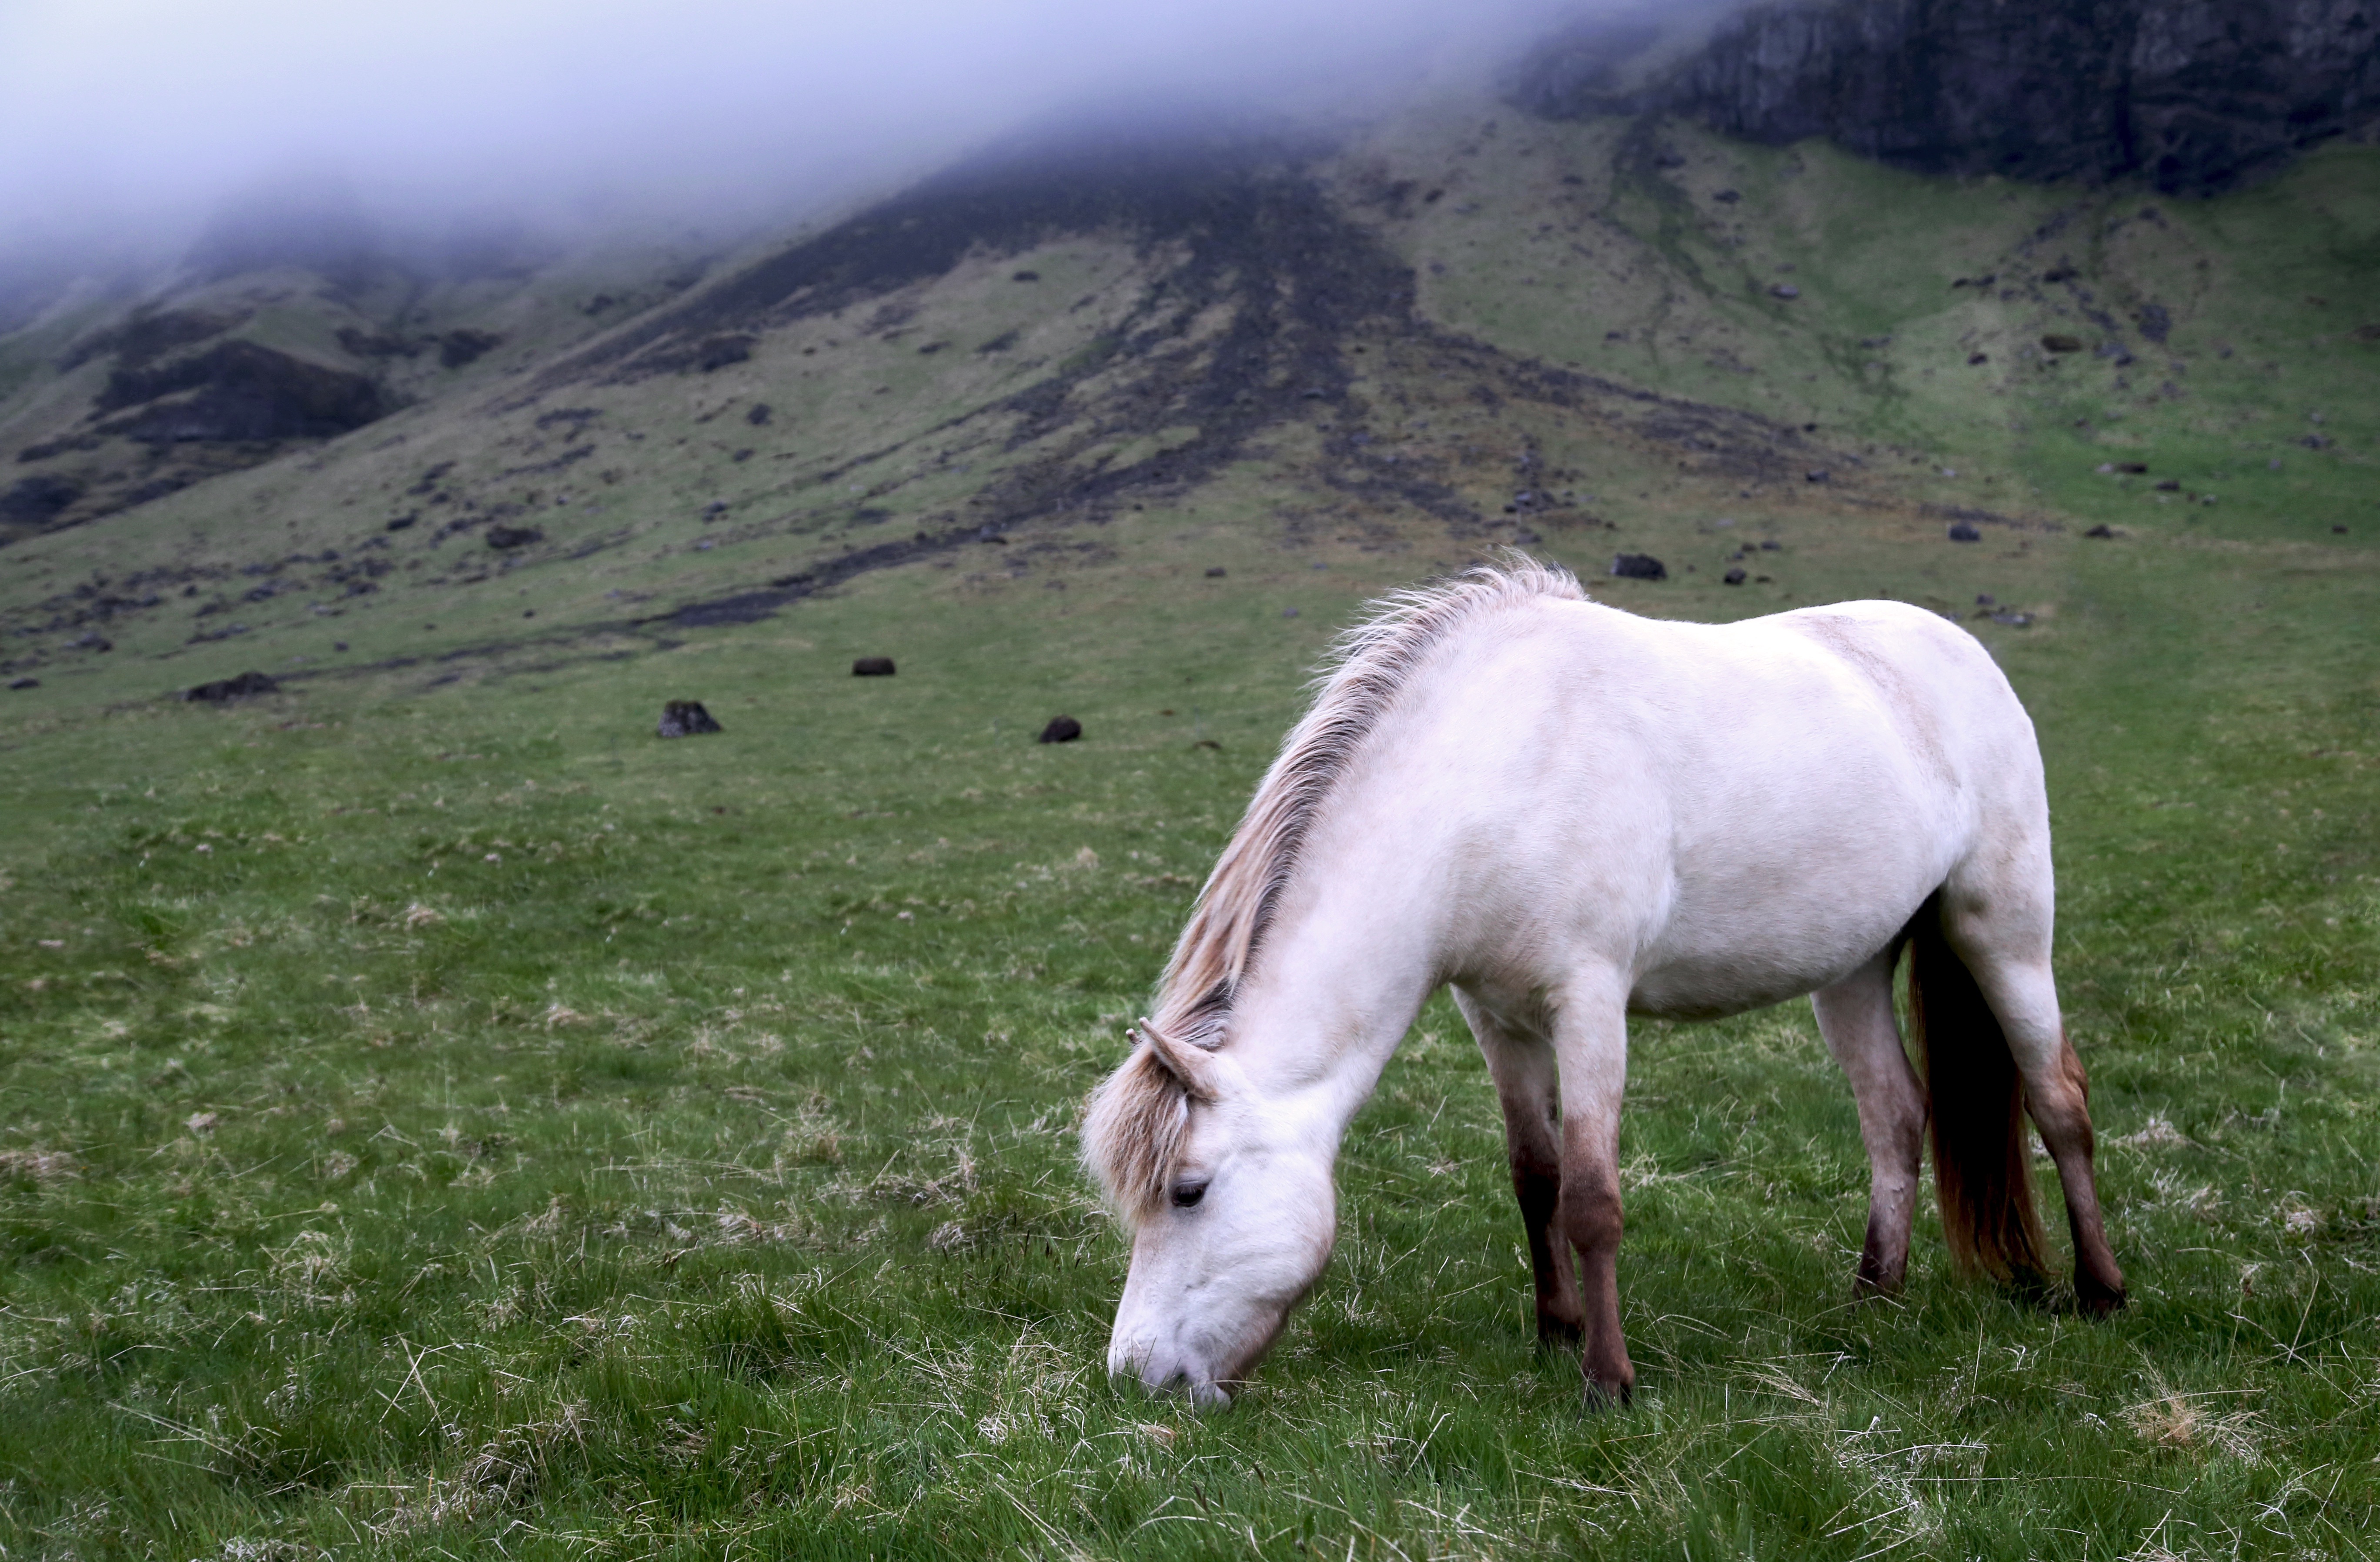 A white stallion grazes in a meadow near a mountain in the fog